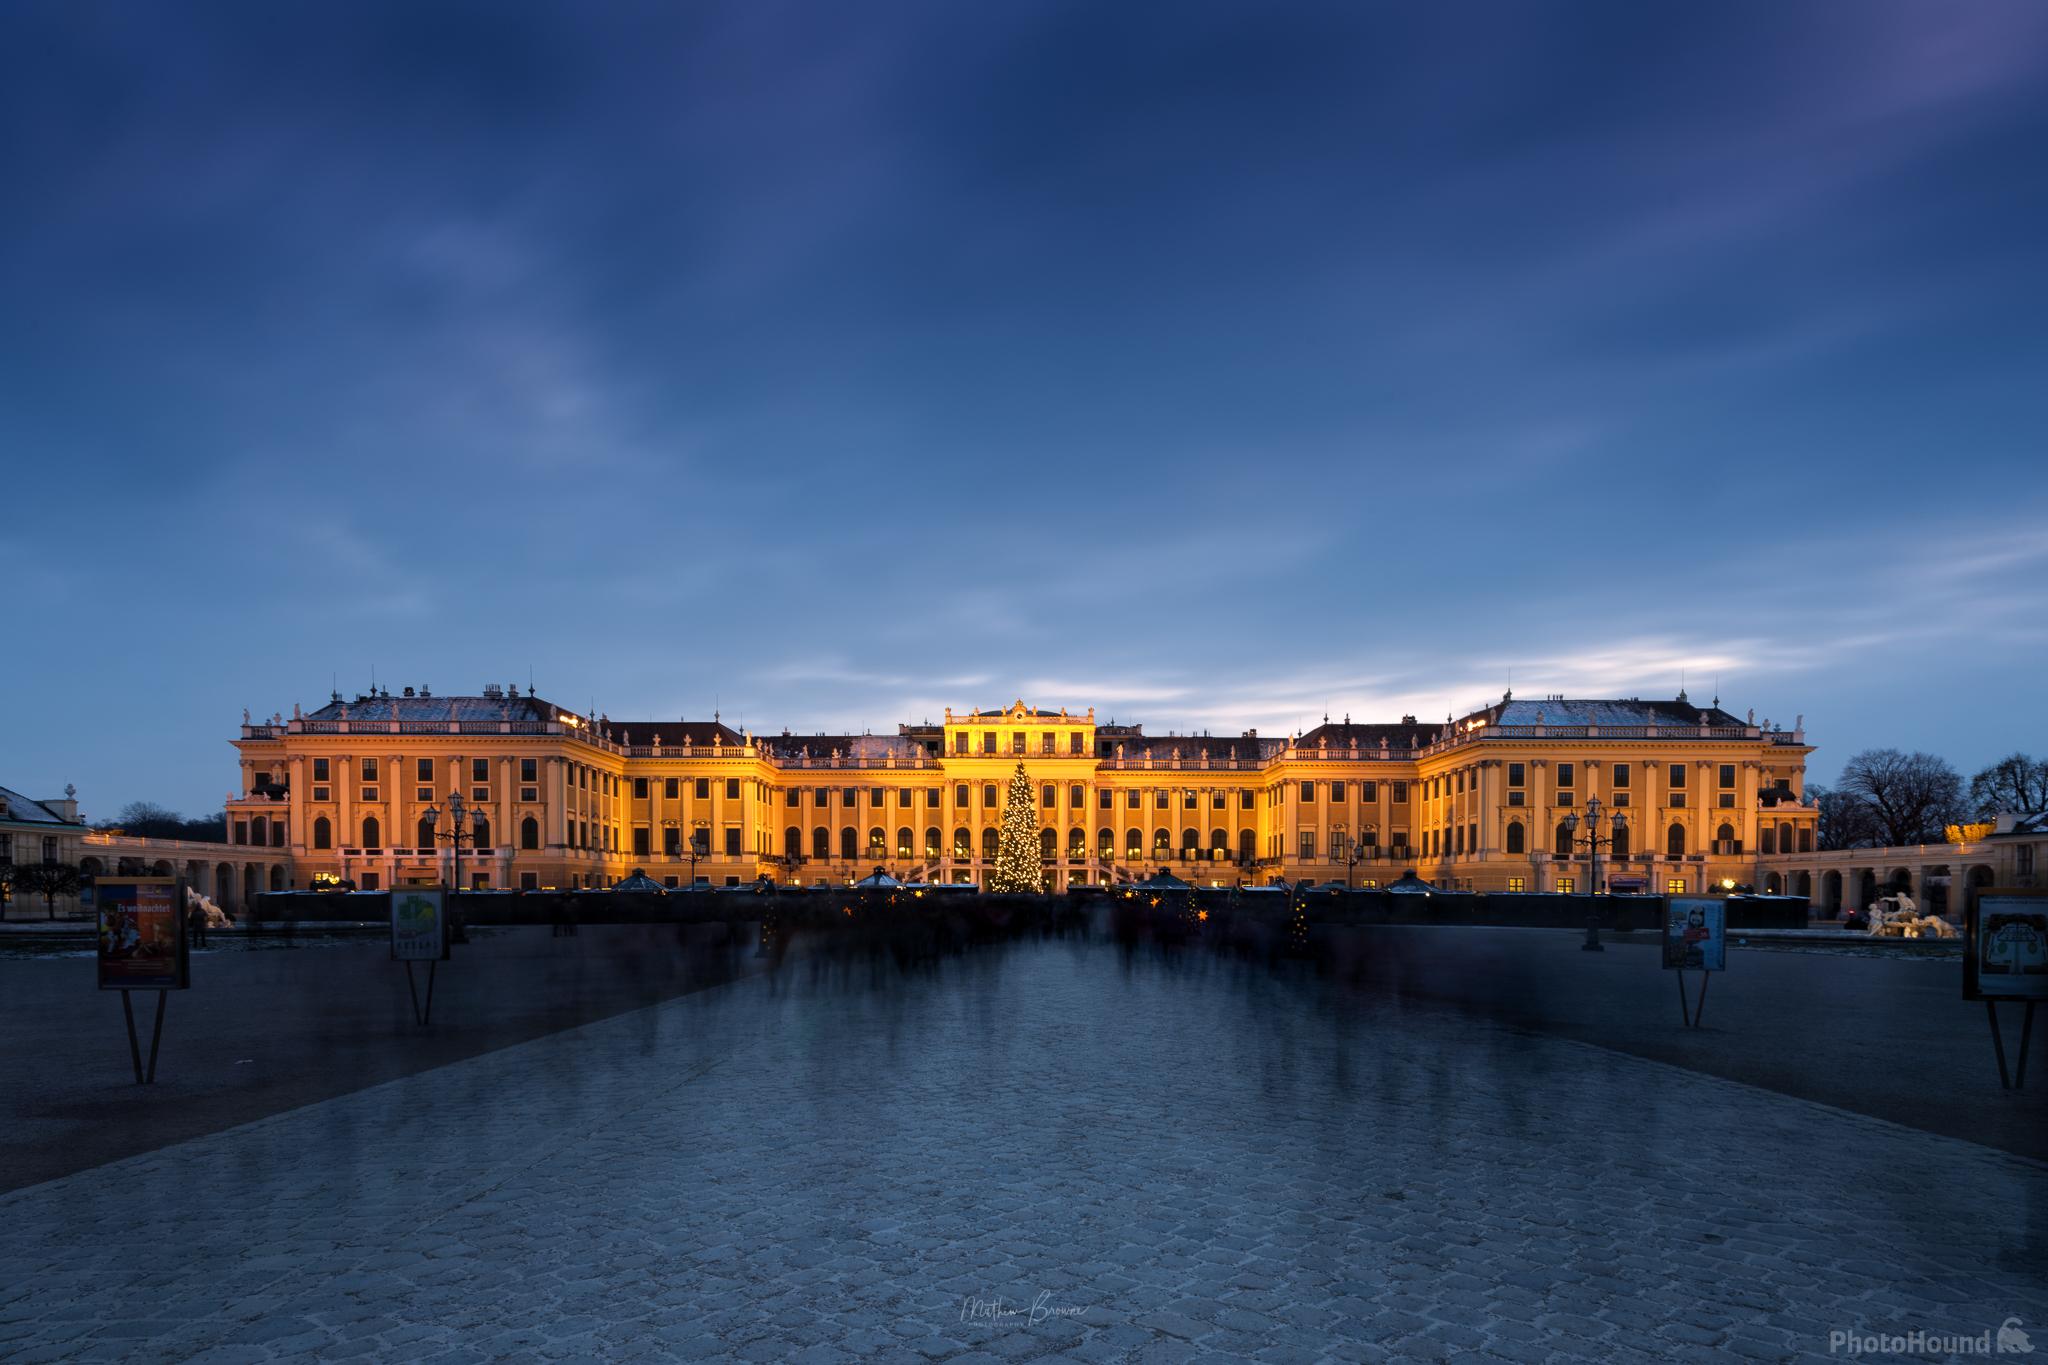 Image of Schönbrunn Palace by Mathew Browne